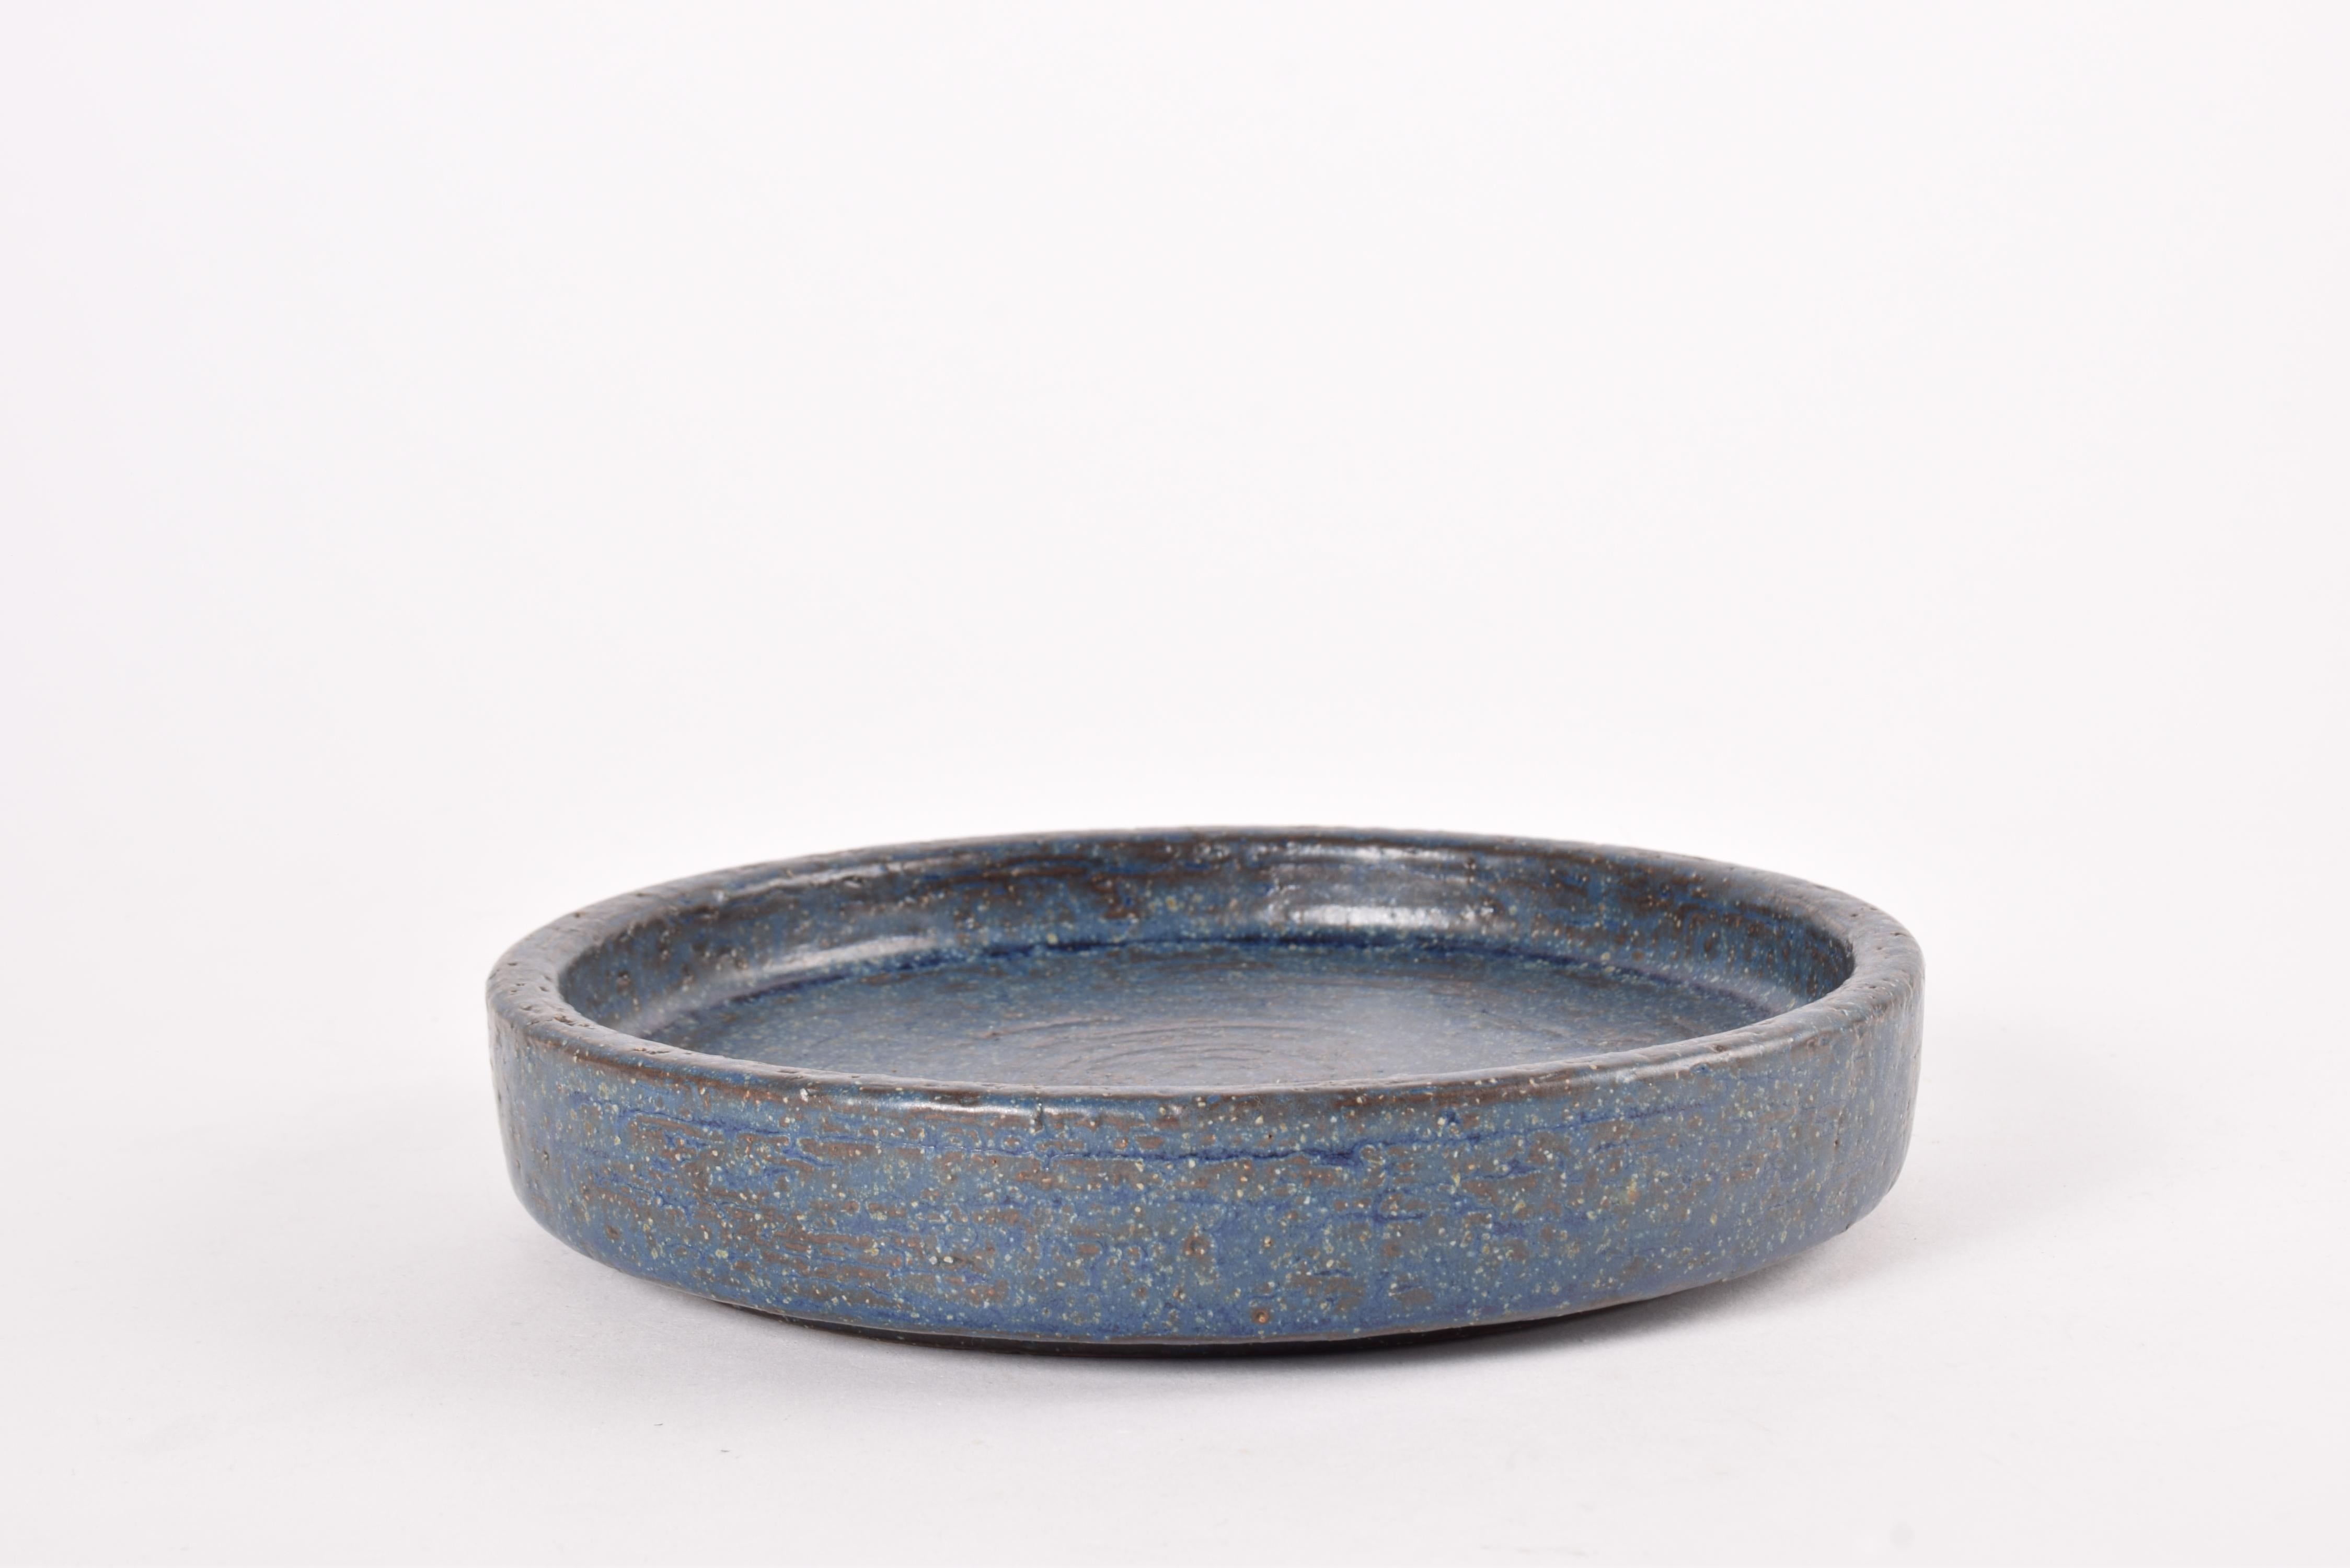 Glazed Palshus Low Round Bowl Dish with Dark Blue Glaze, Danish Modern Ceramic 1960s For Sale